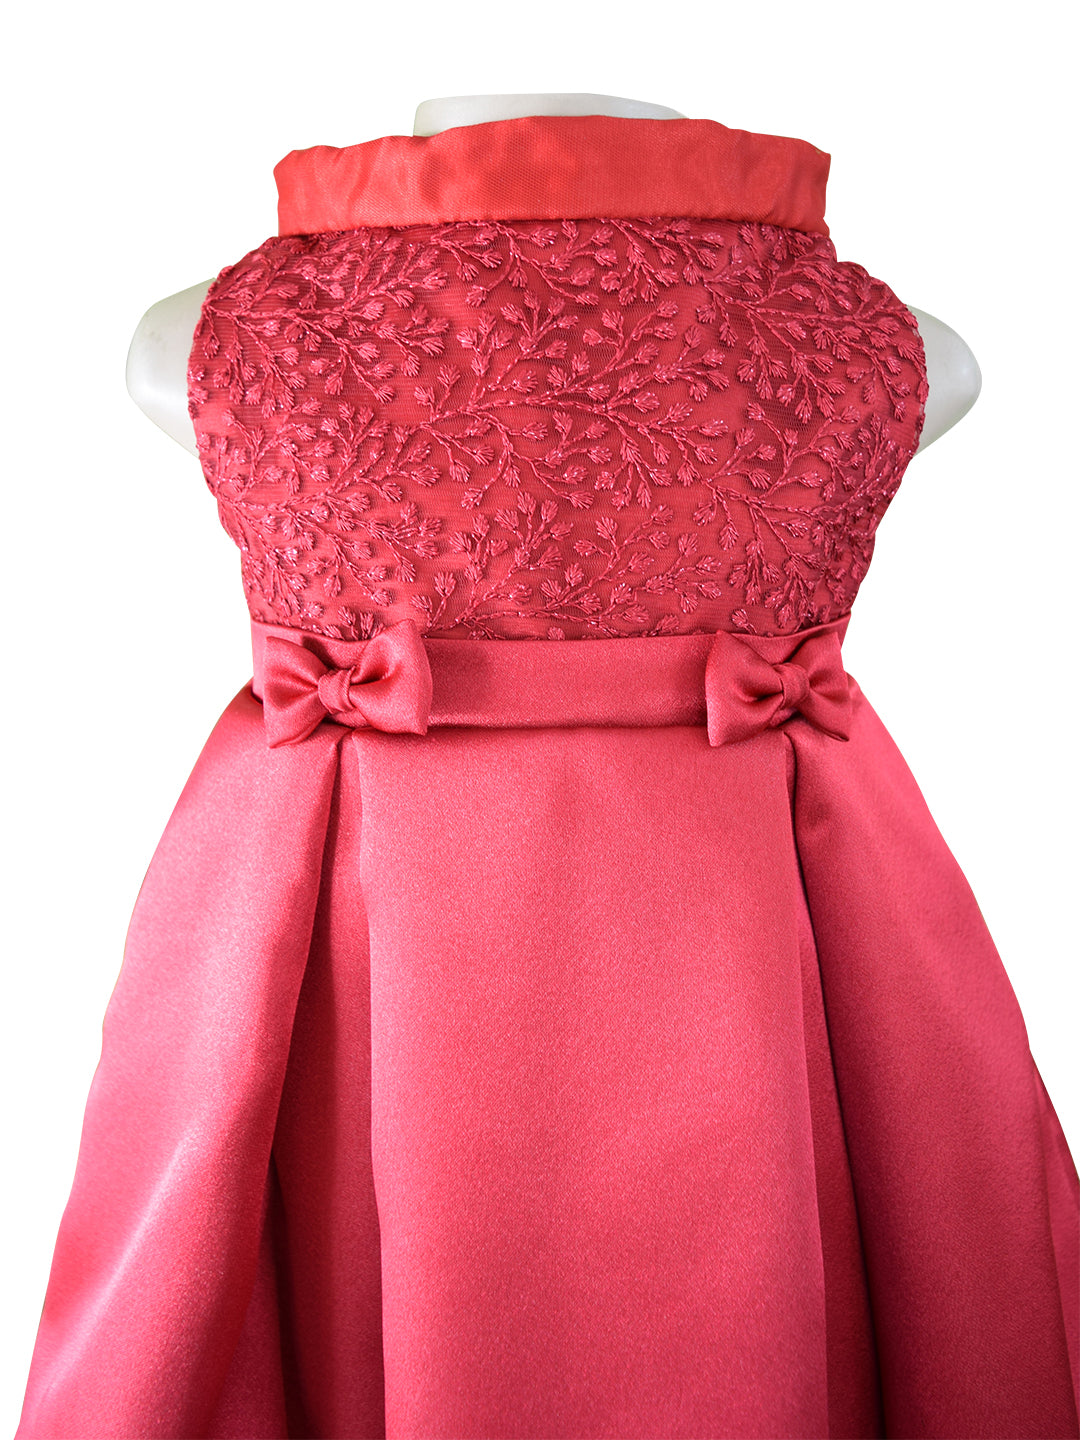 Silk Printed Girls Dress Material, Red at Rs 1249 in Surat | ID: 23086386333